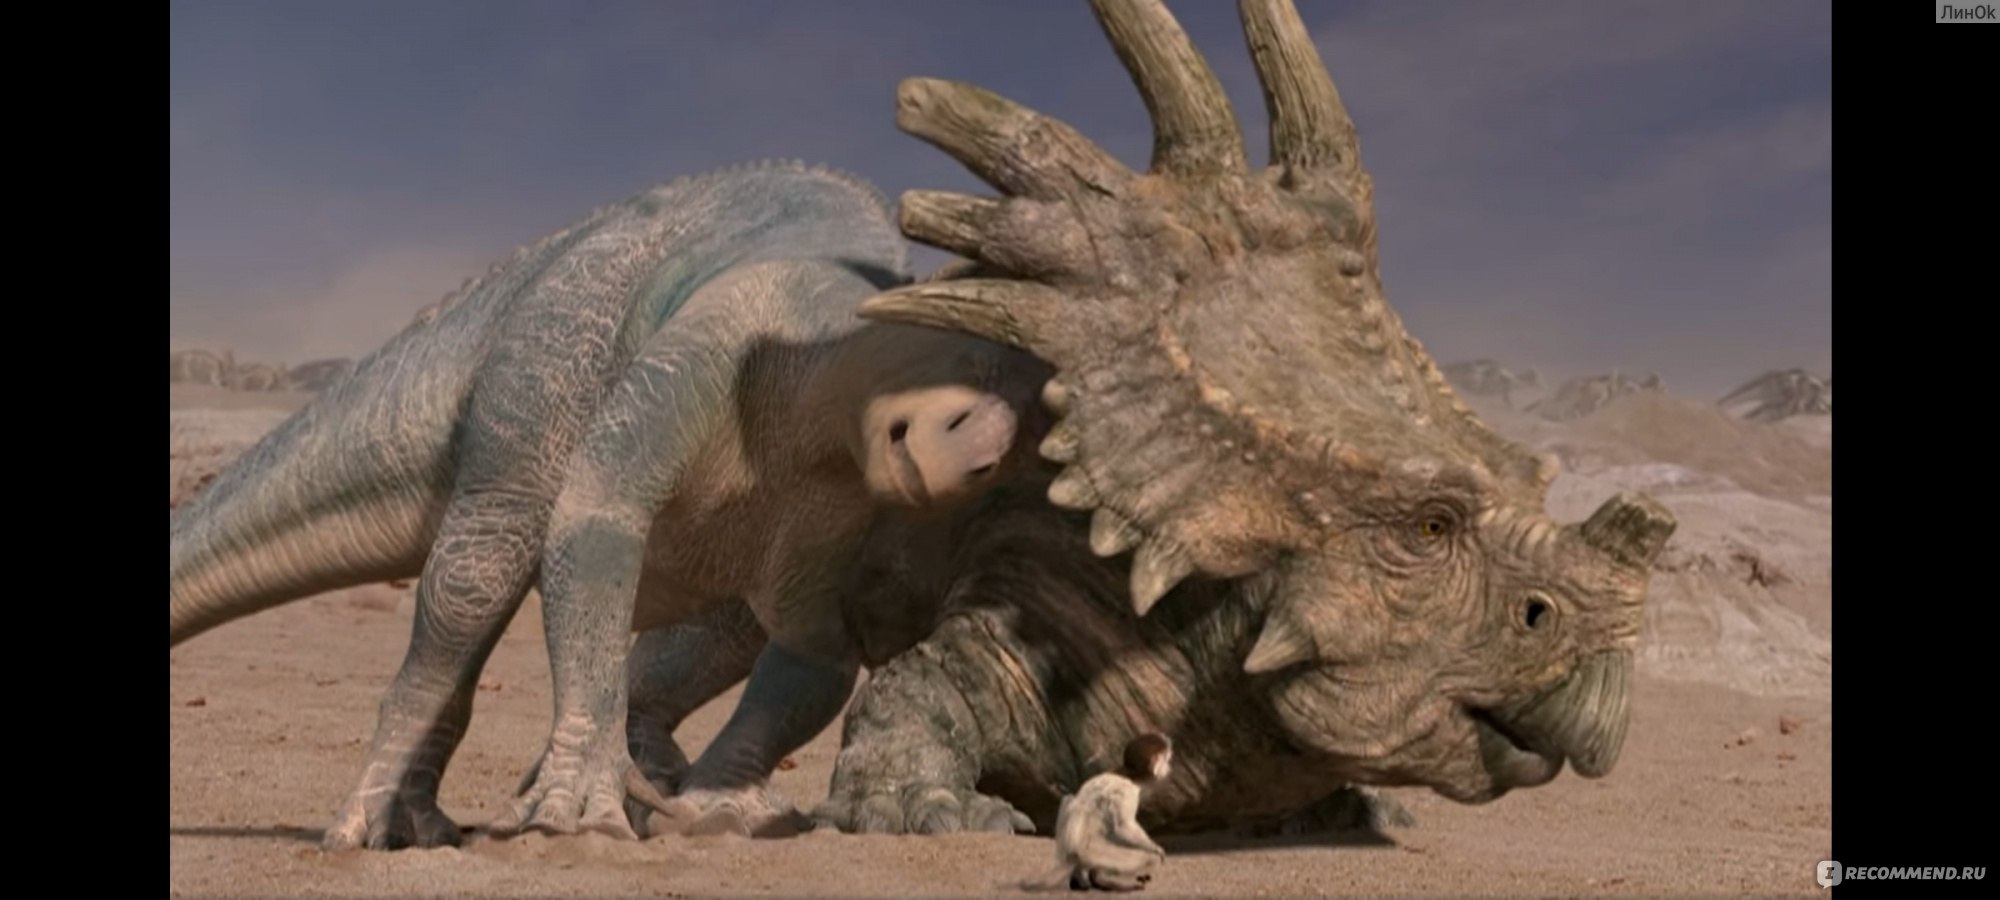 Динозавр 2001